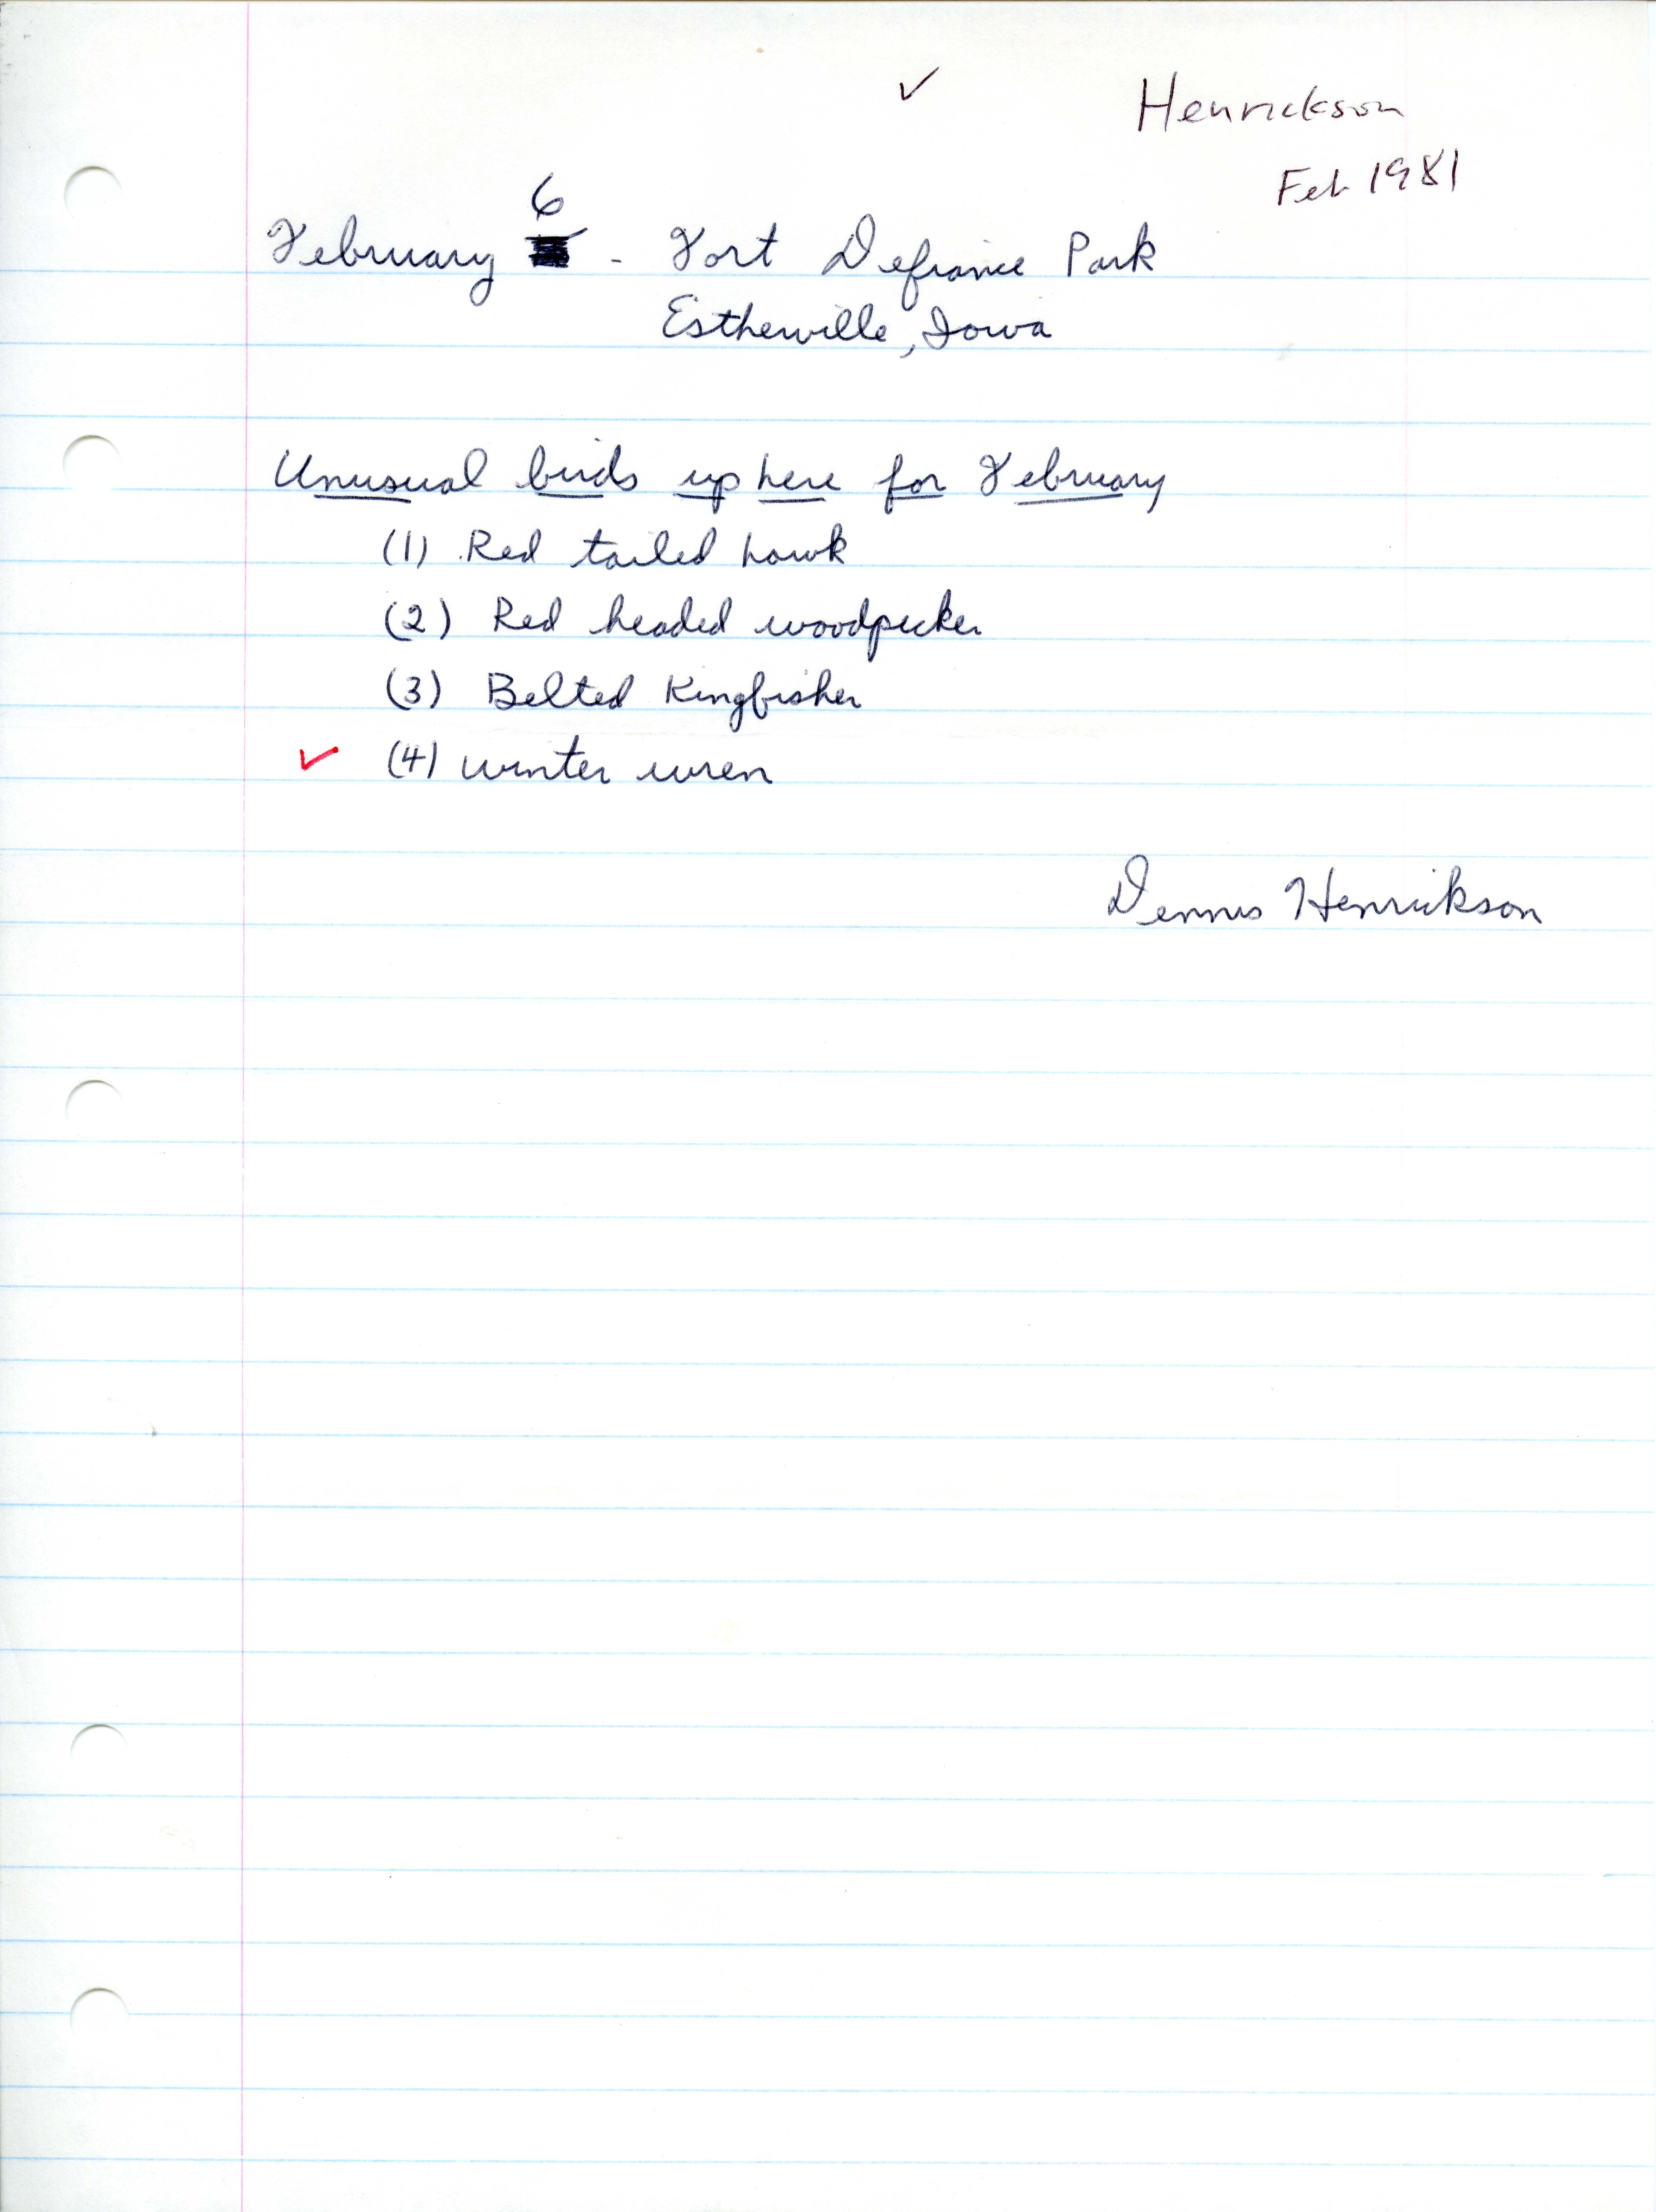 Bird sighting list from Dennis Henrickson, February 6, 1981